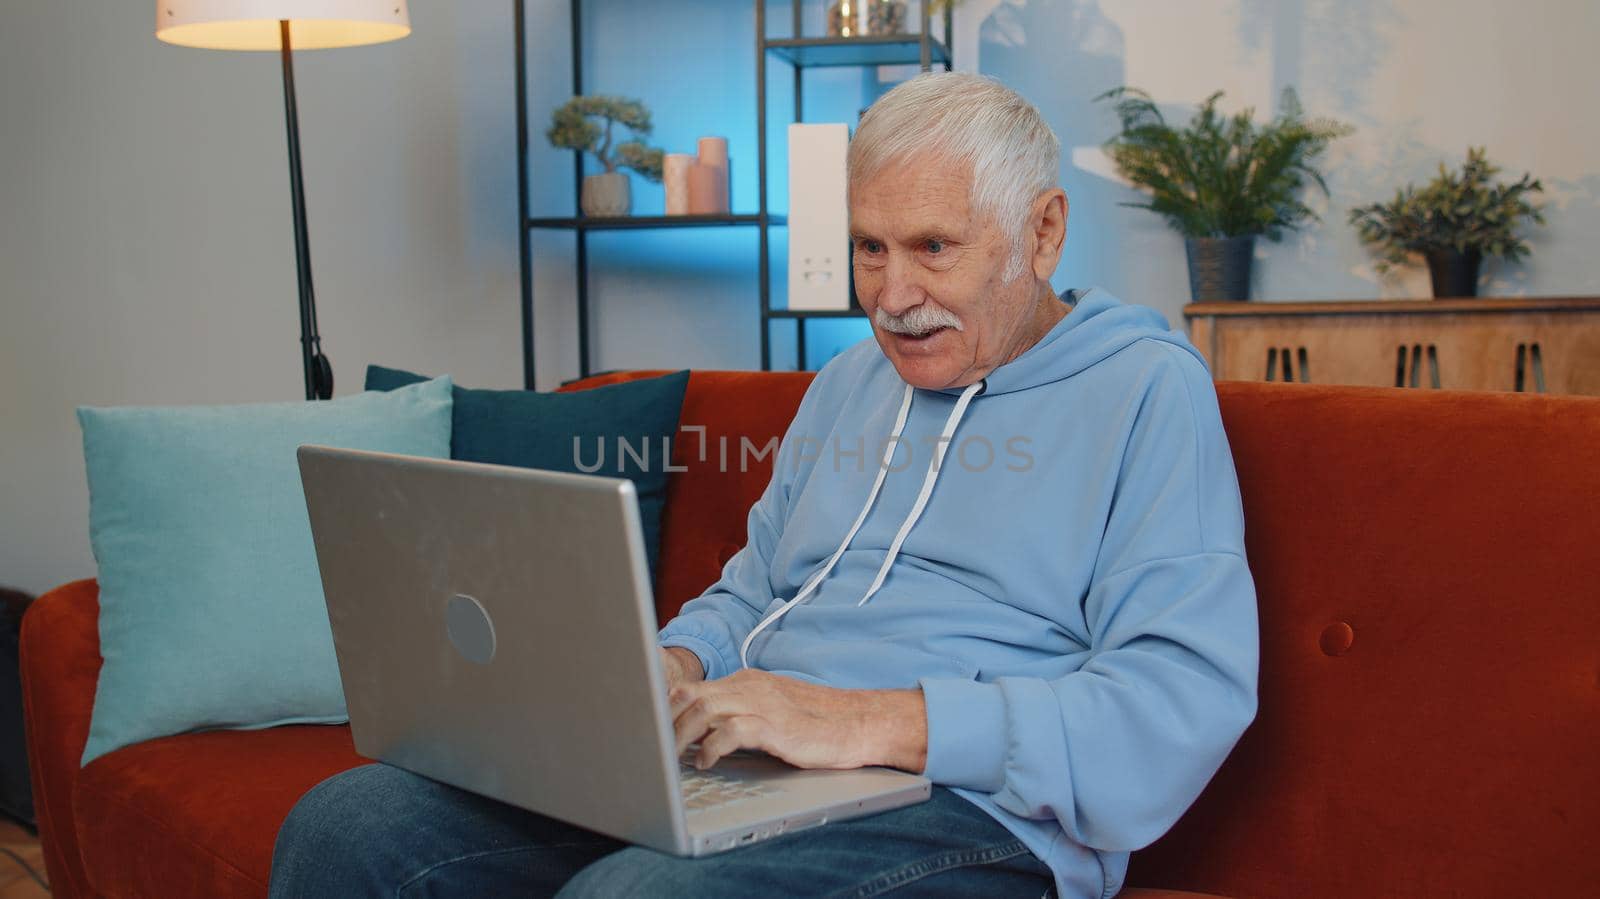 Senior man freelancer starts working on laptop, sends messages, makes online purchases at home by efuror